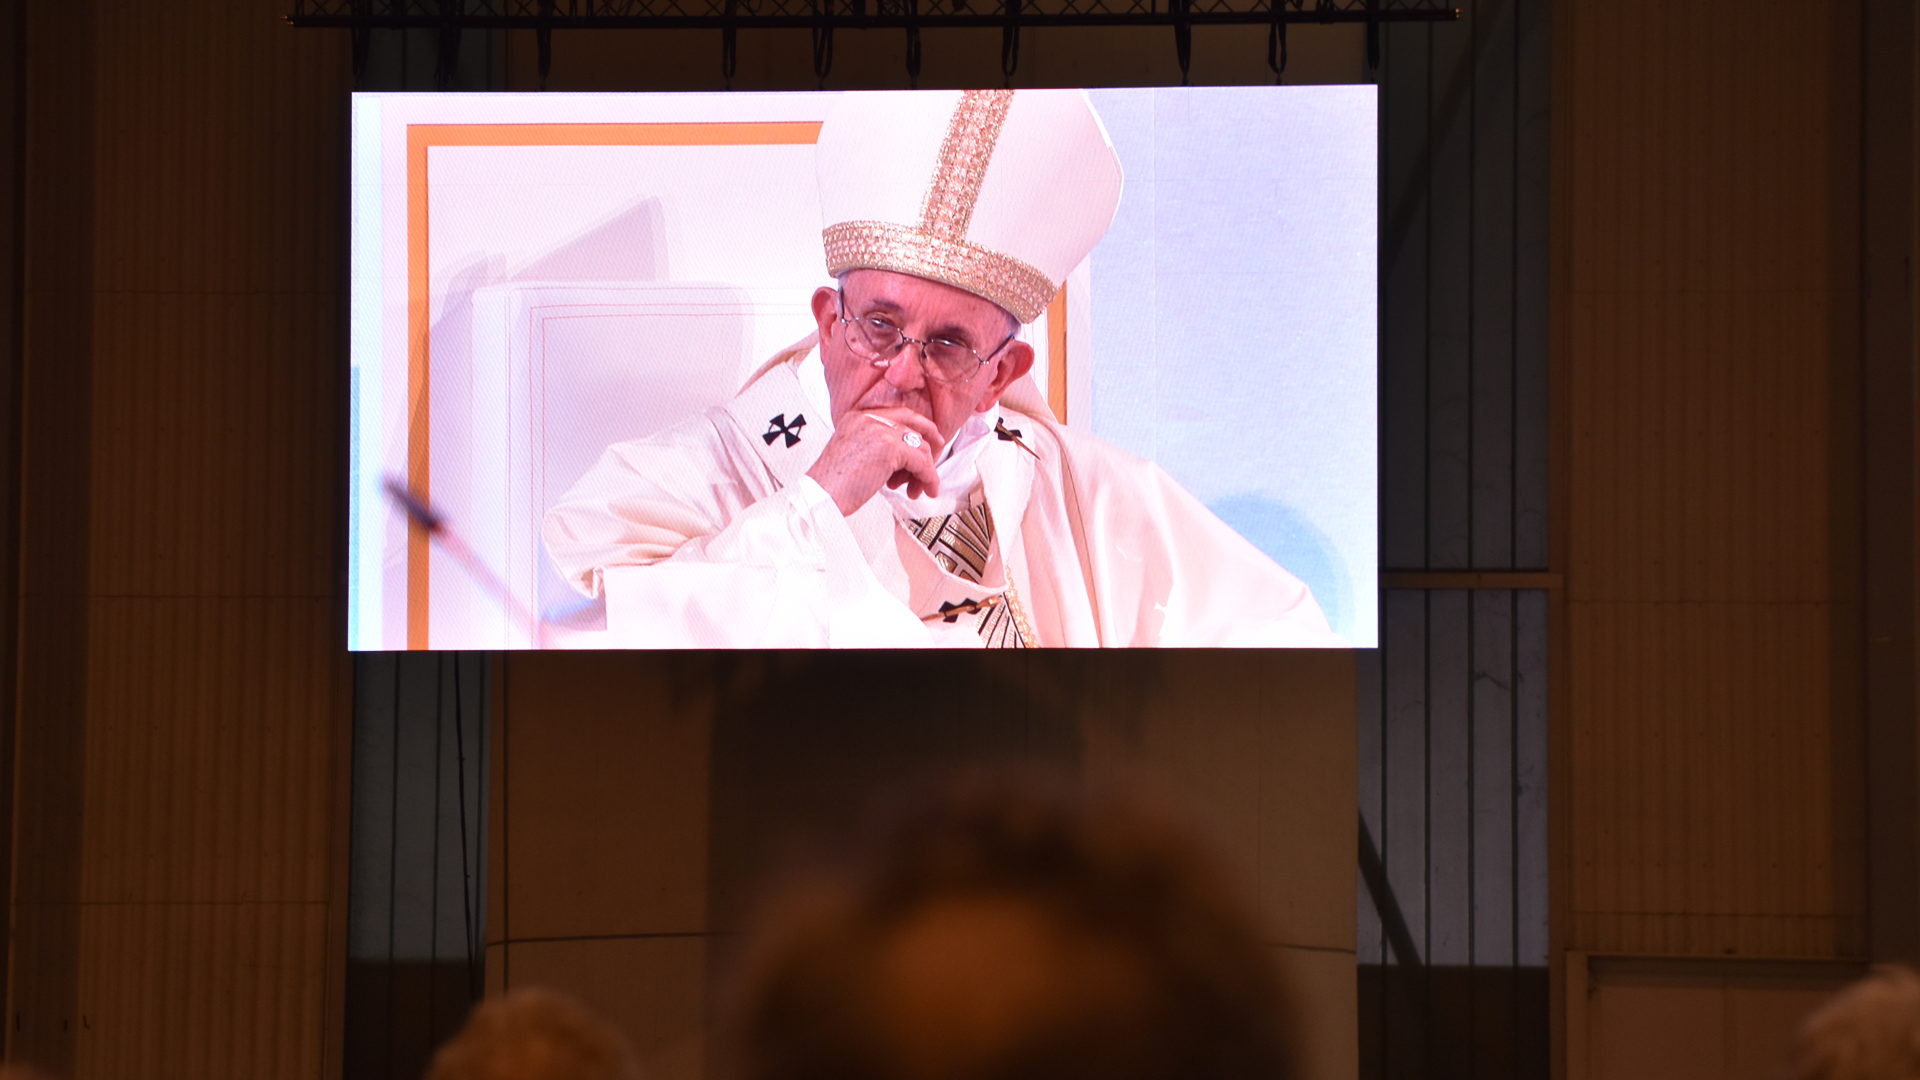 Papst Franziskus via Bildschirm